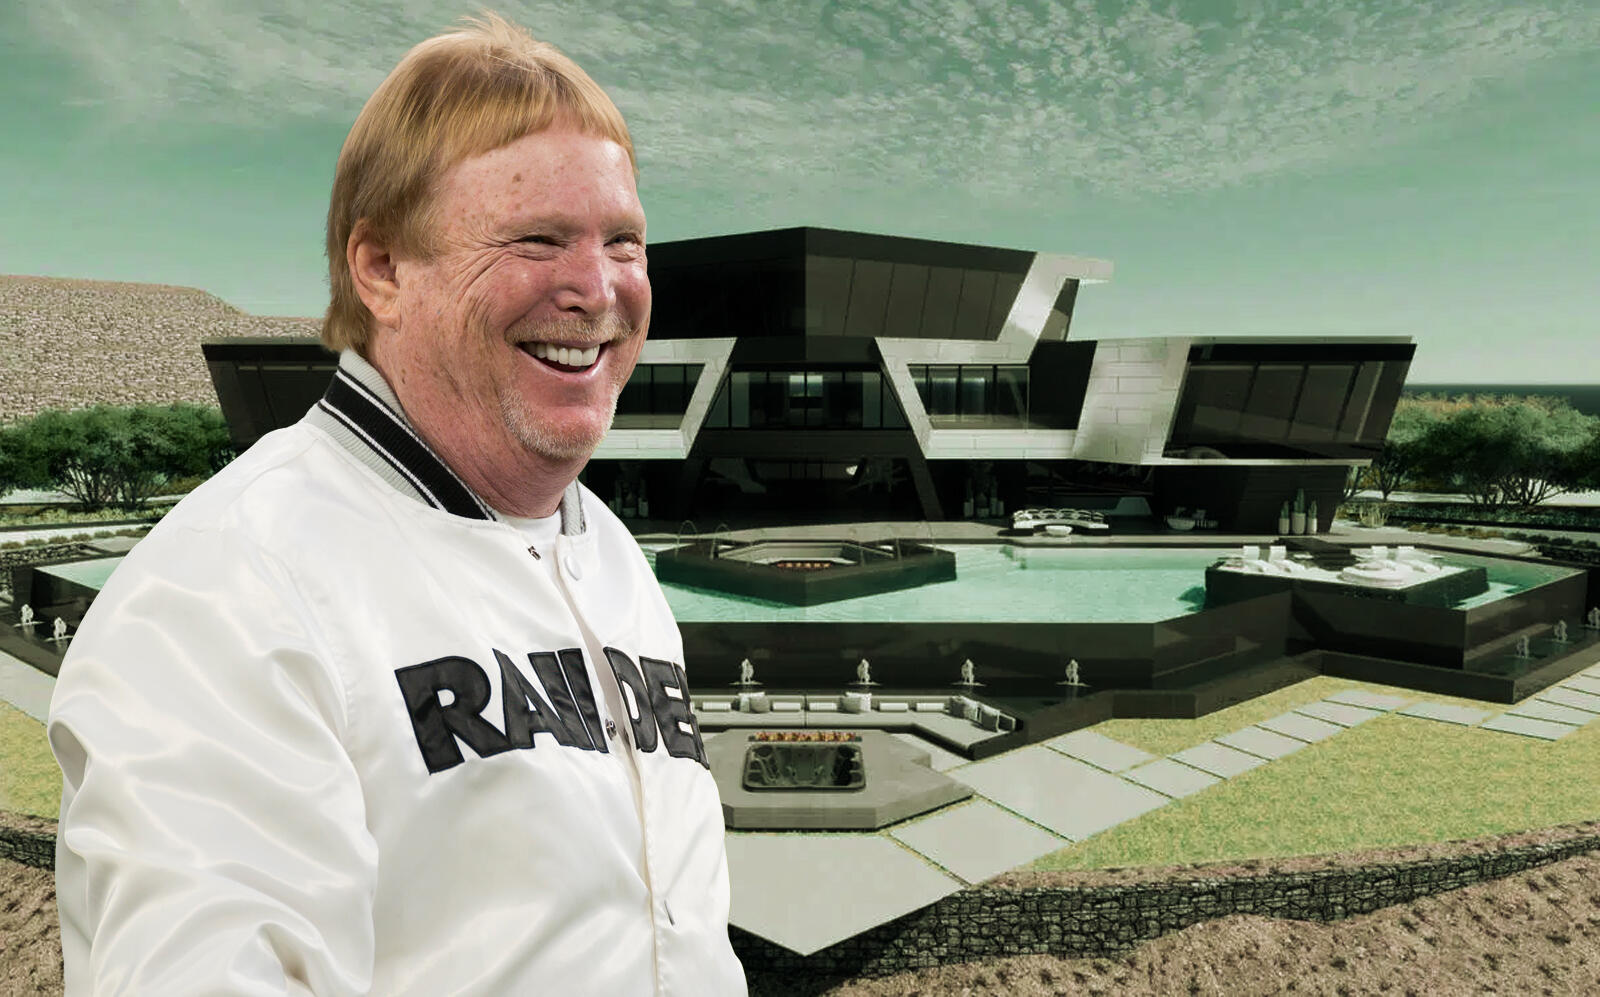 Who owns the Las Vegas Raiders?